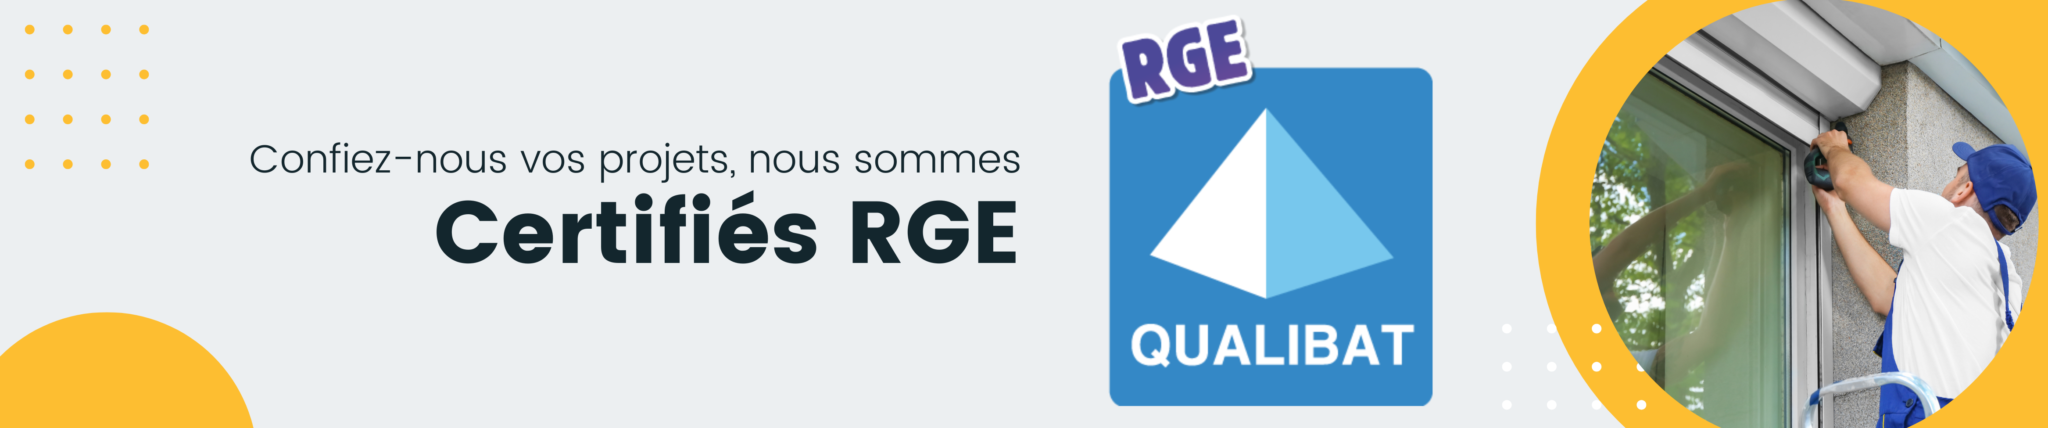 Pro-Fermetures - certification RGE Qualibat